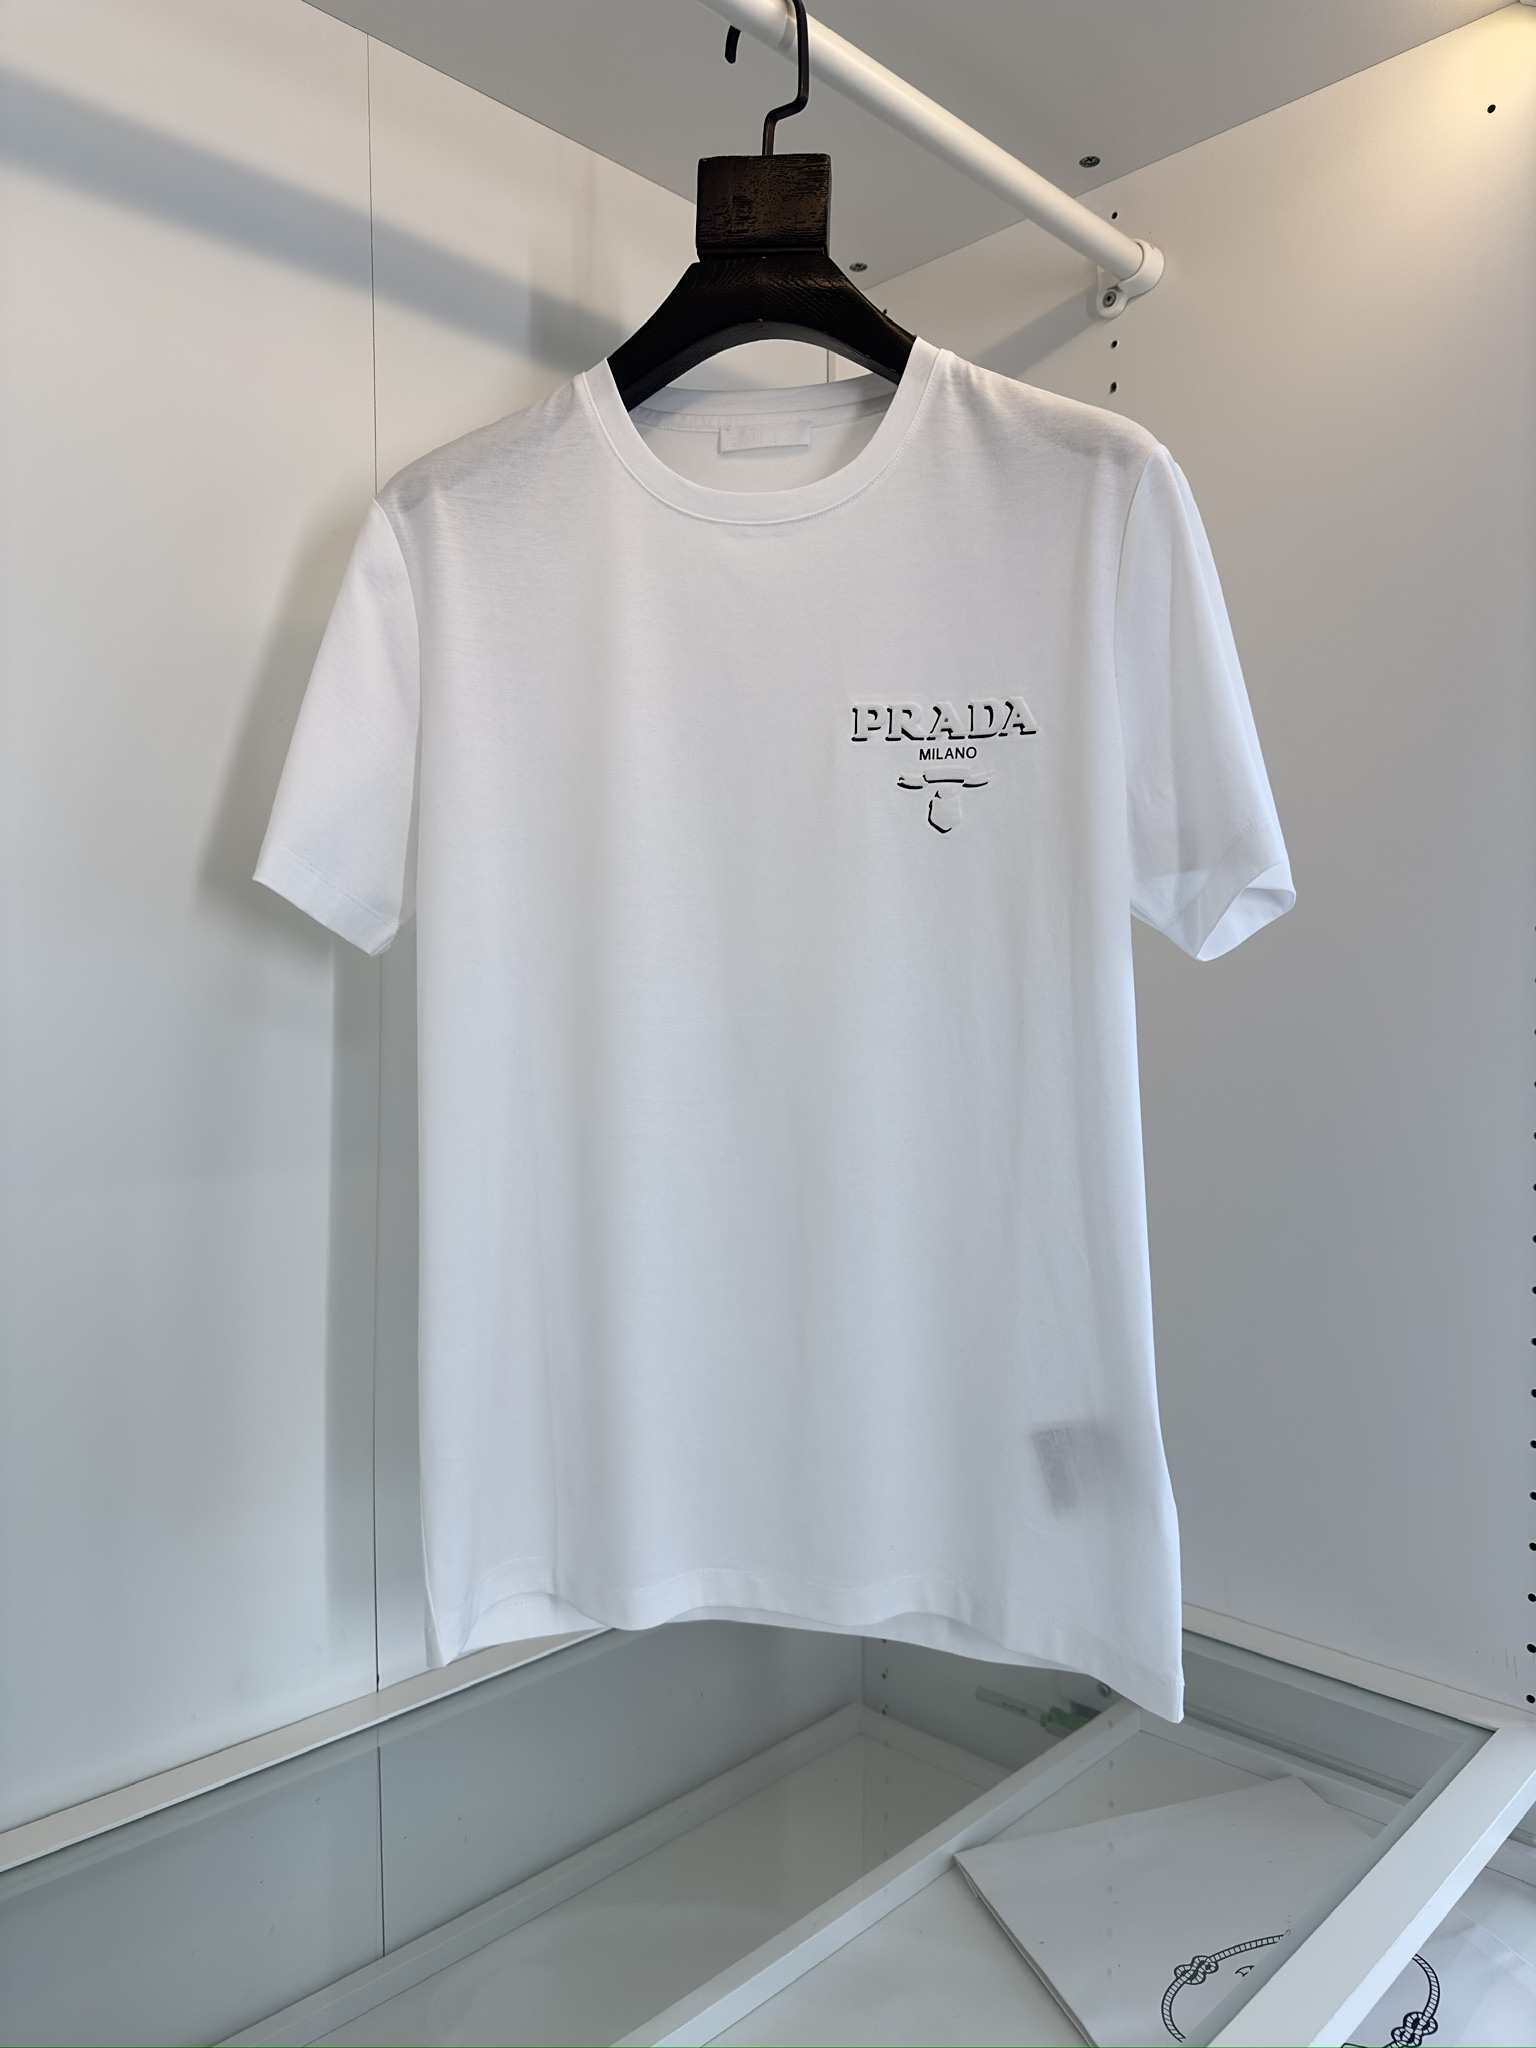 Prada Clothing T-Shirt Online Store
 Black White Printing Cotton Mercerized Spring Collection Fashion Short Sleeve